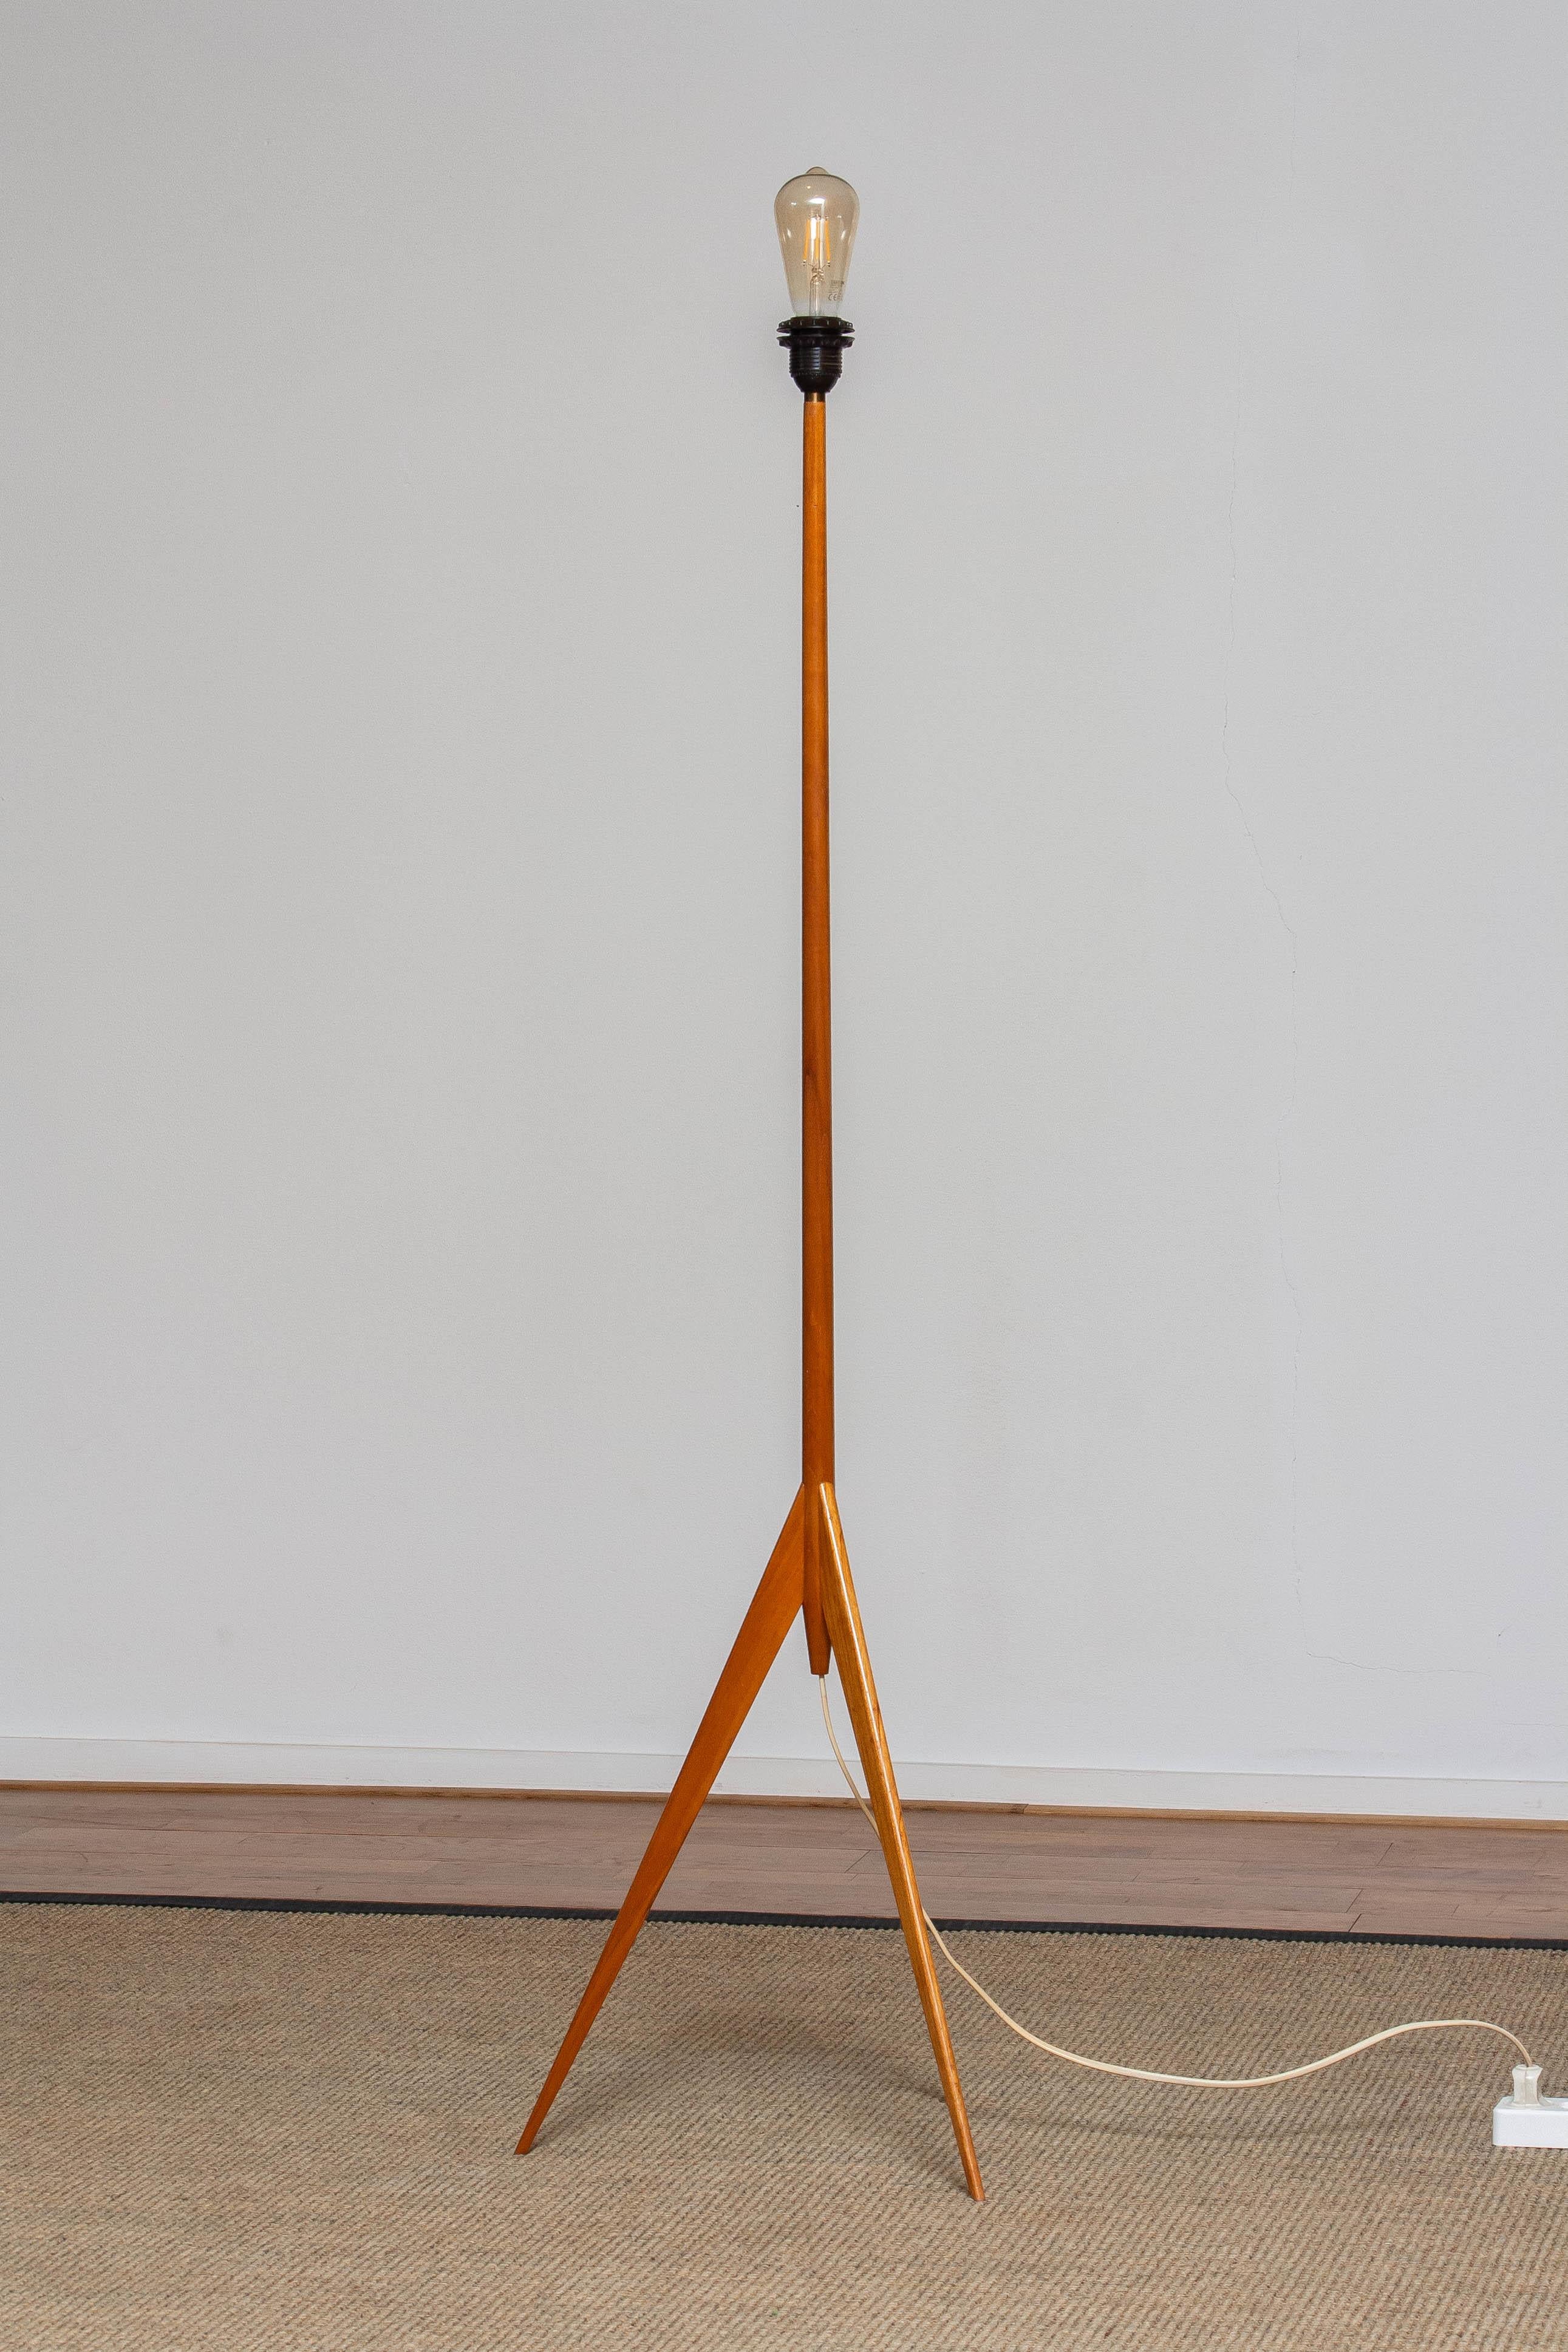 1960s Slim and Tall Scandinavian Teak Tripot Floor Lamp by Luxus from Sweden In Good Condition For Sale In Silvolde, Gelderland